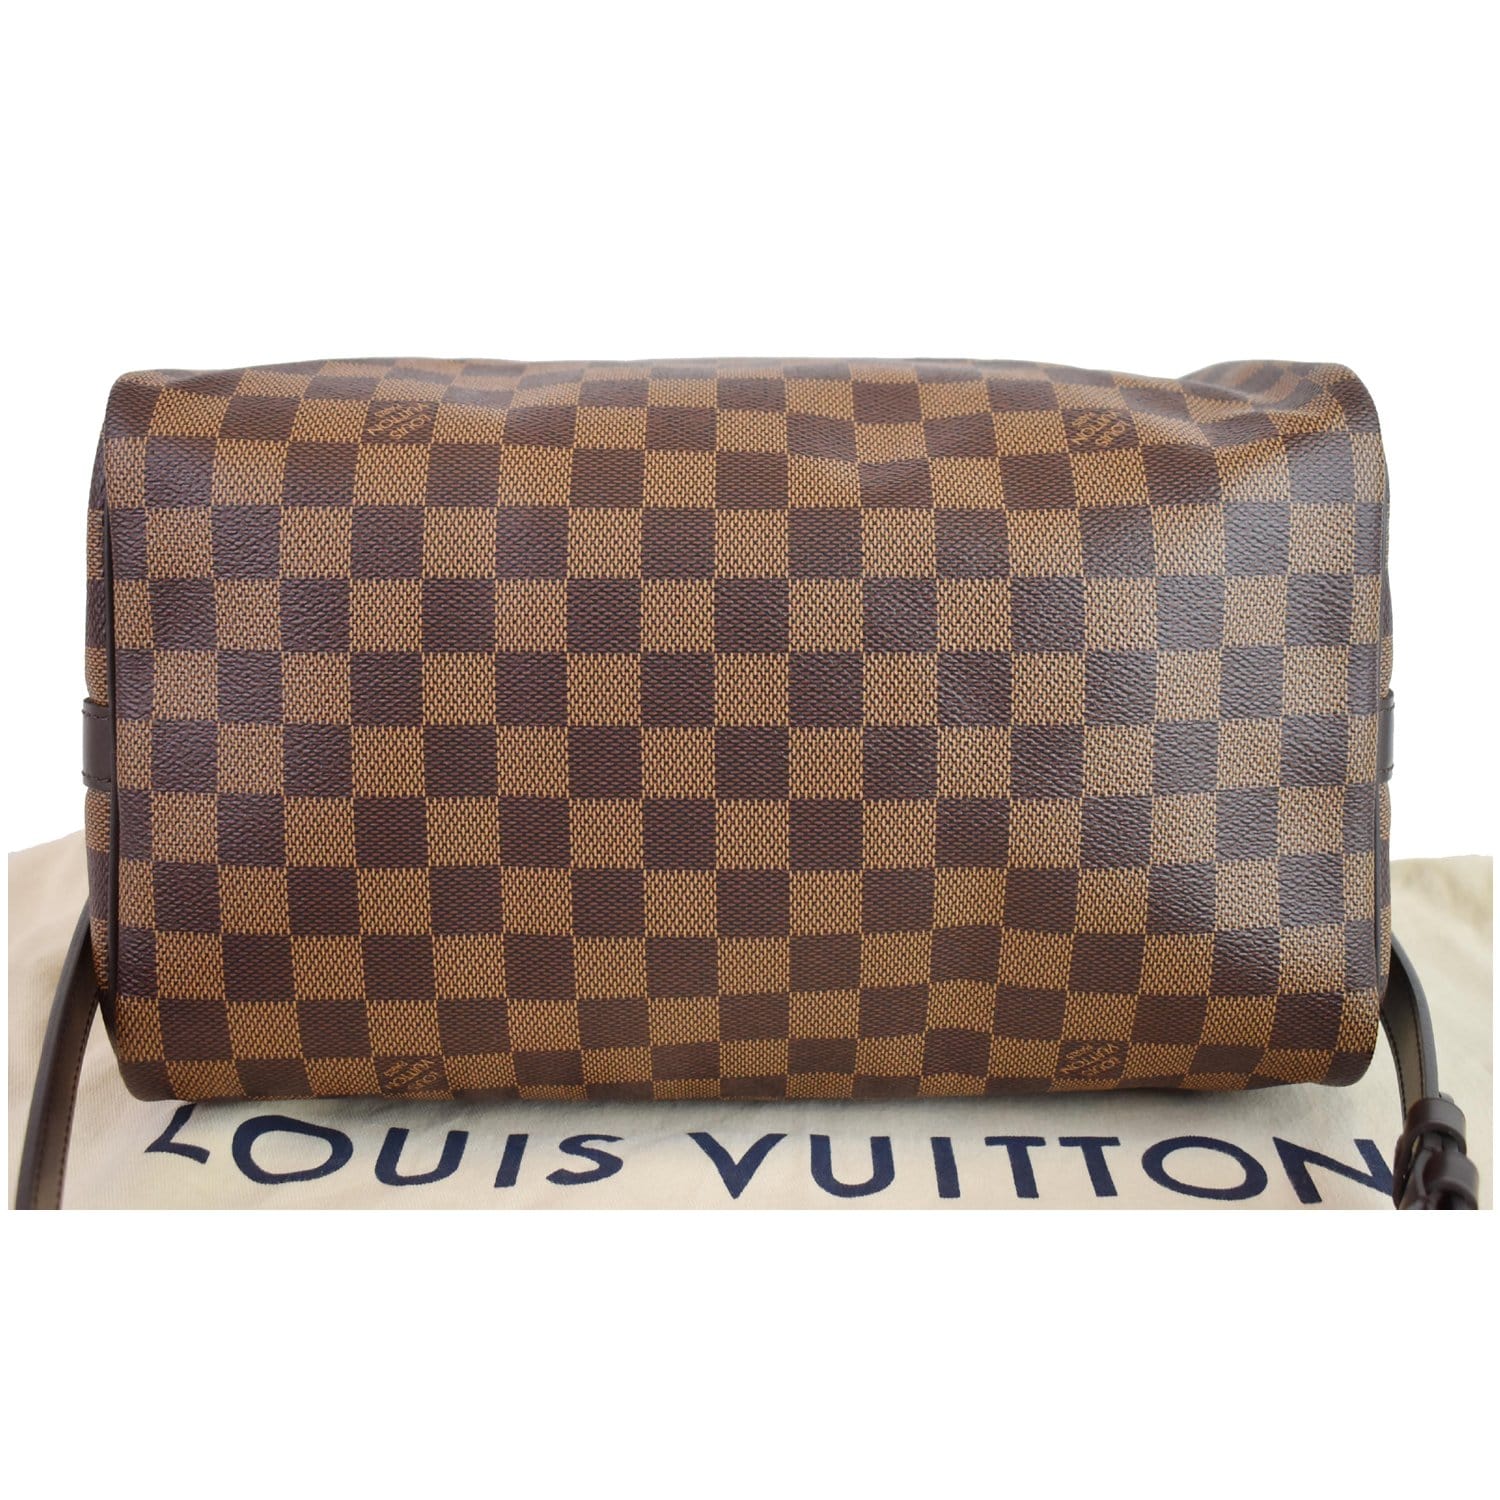 Sac à main Louis Vuitton Speedy 323820 d'occasion